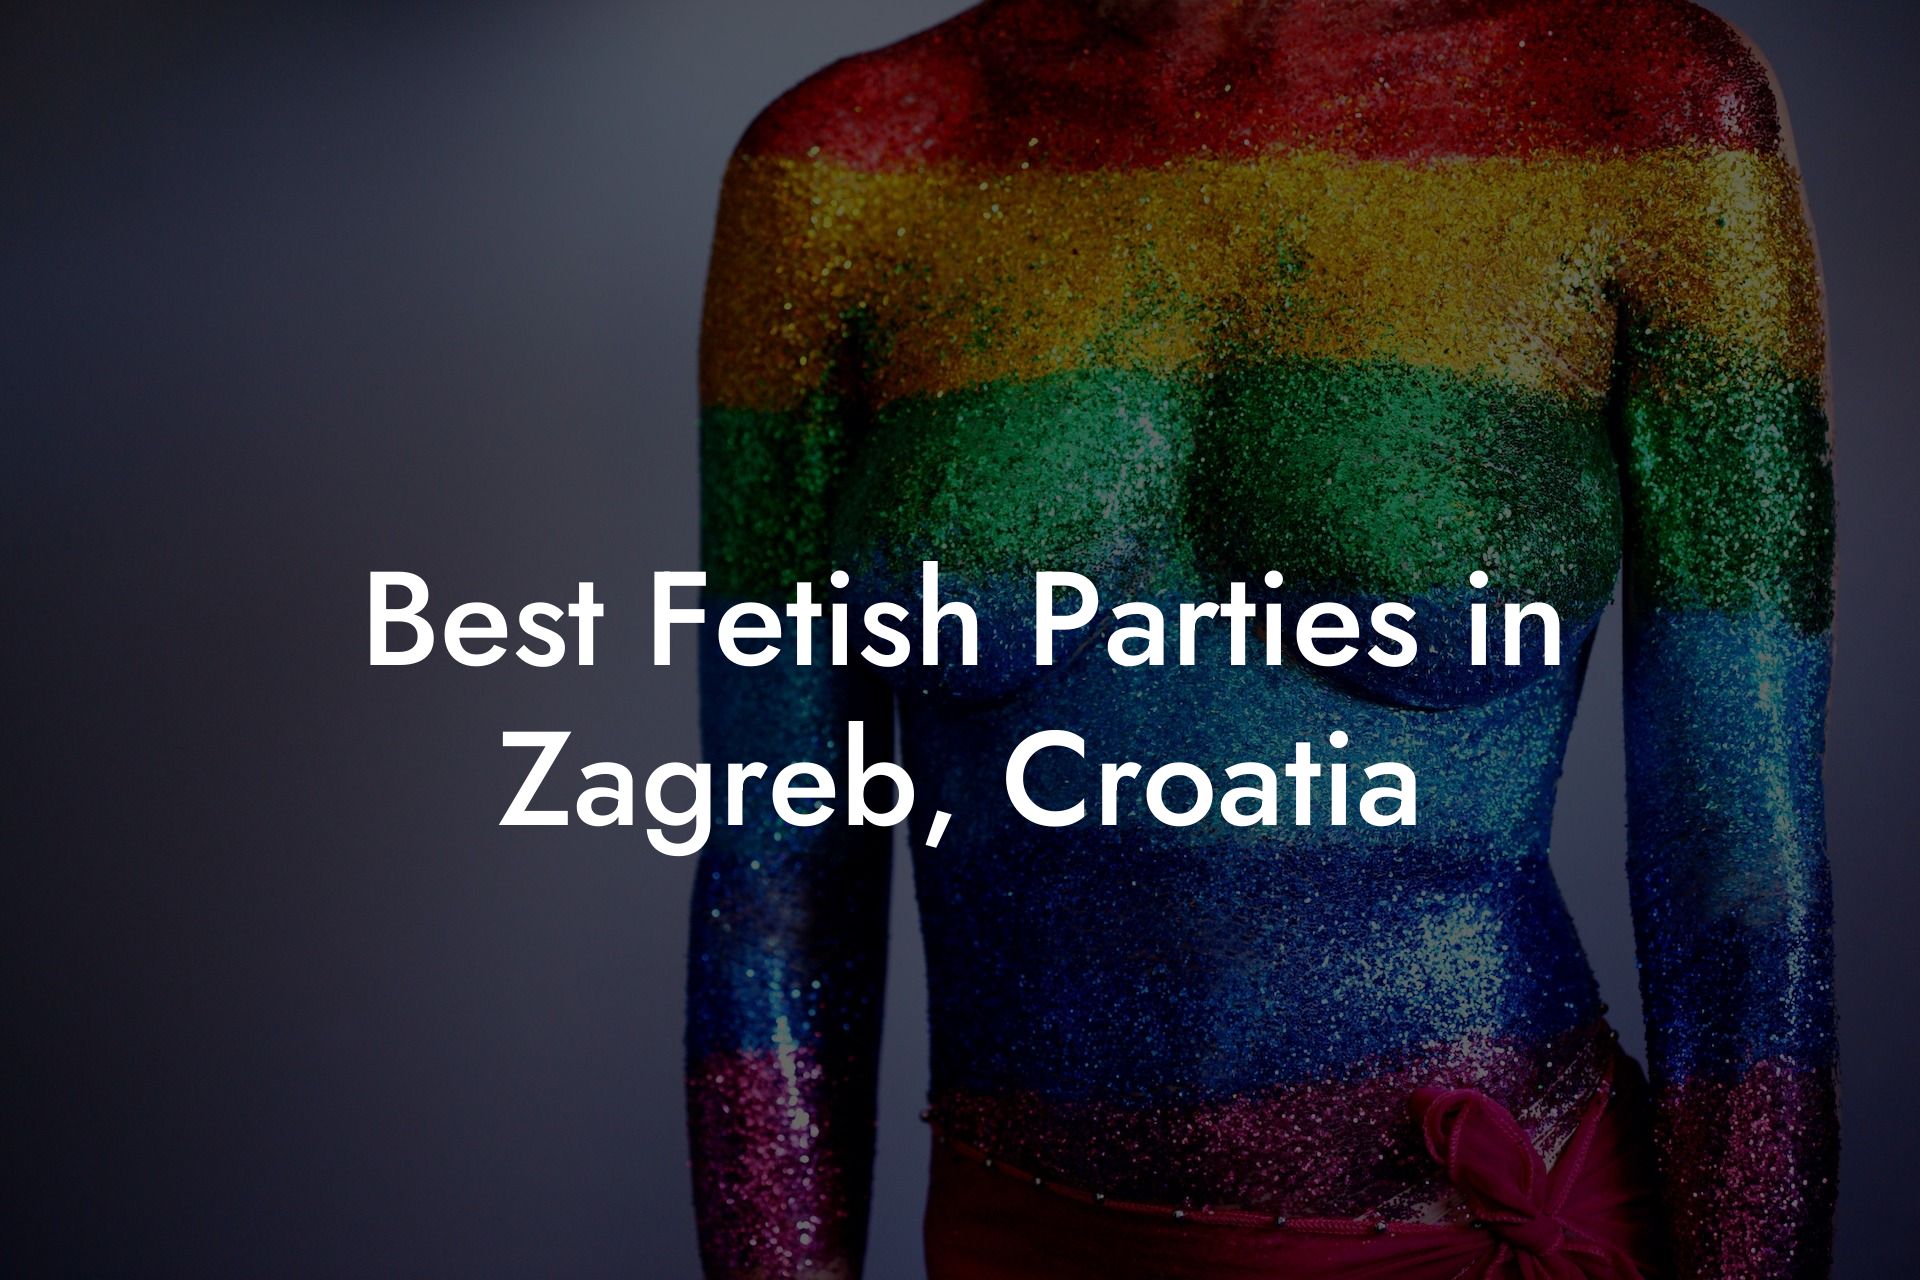 Best Fetish Parties in Zagreb, Croatia